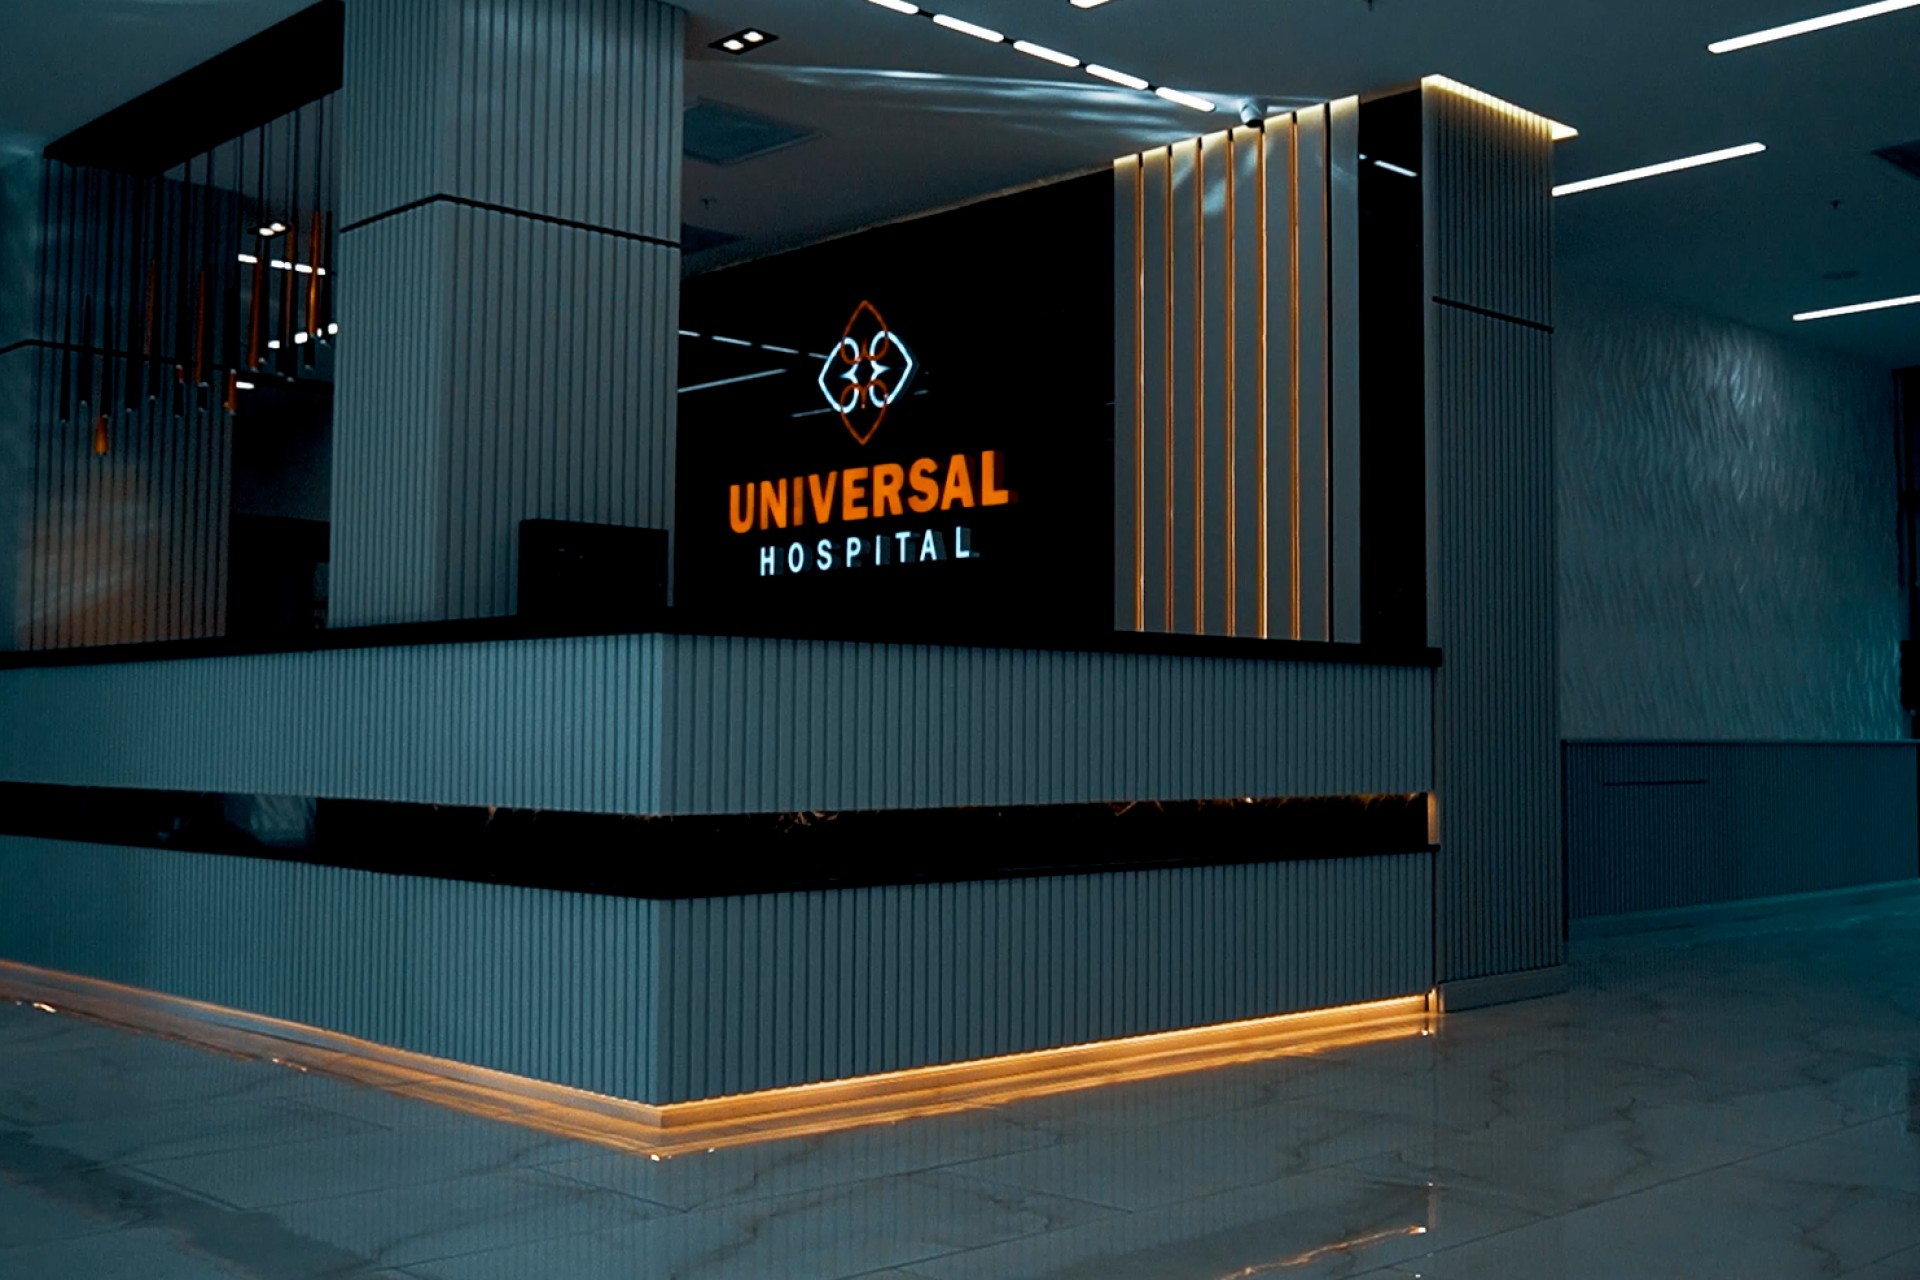 Universal Hospital